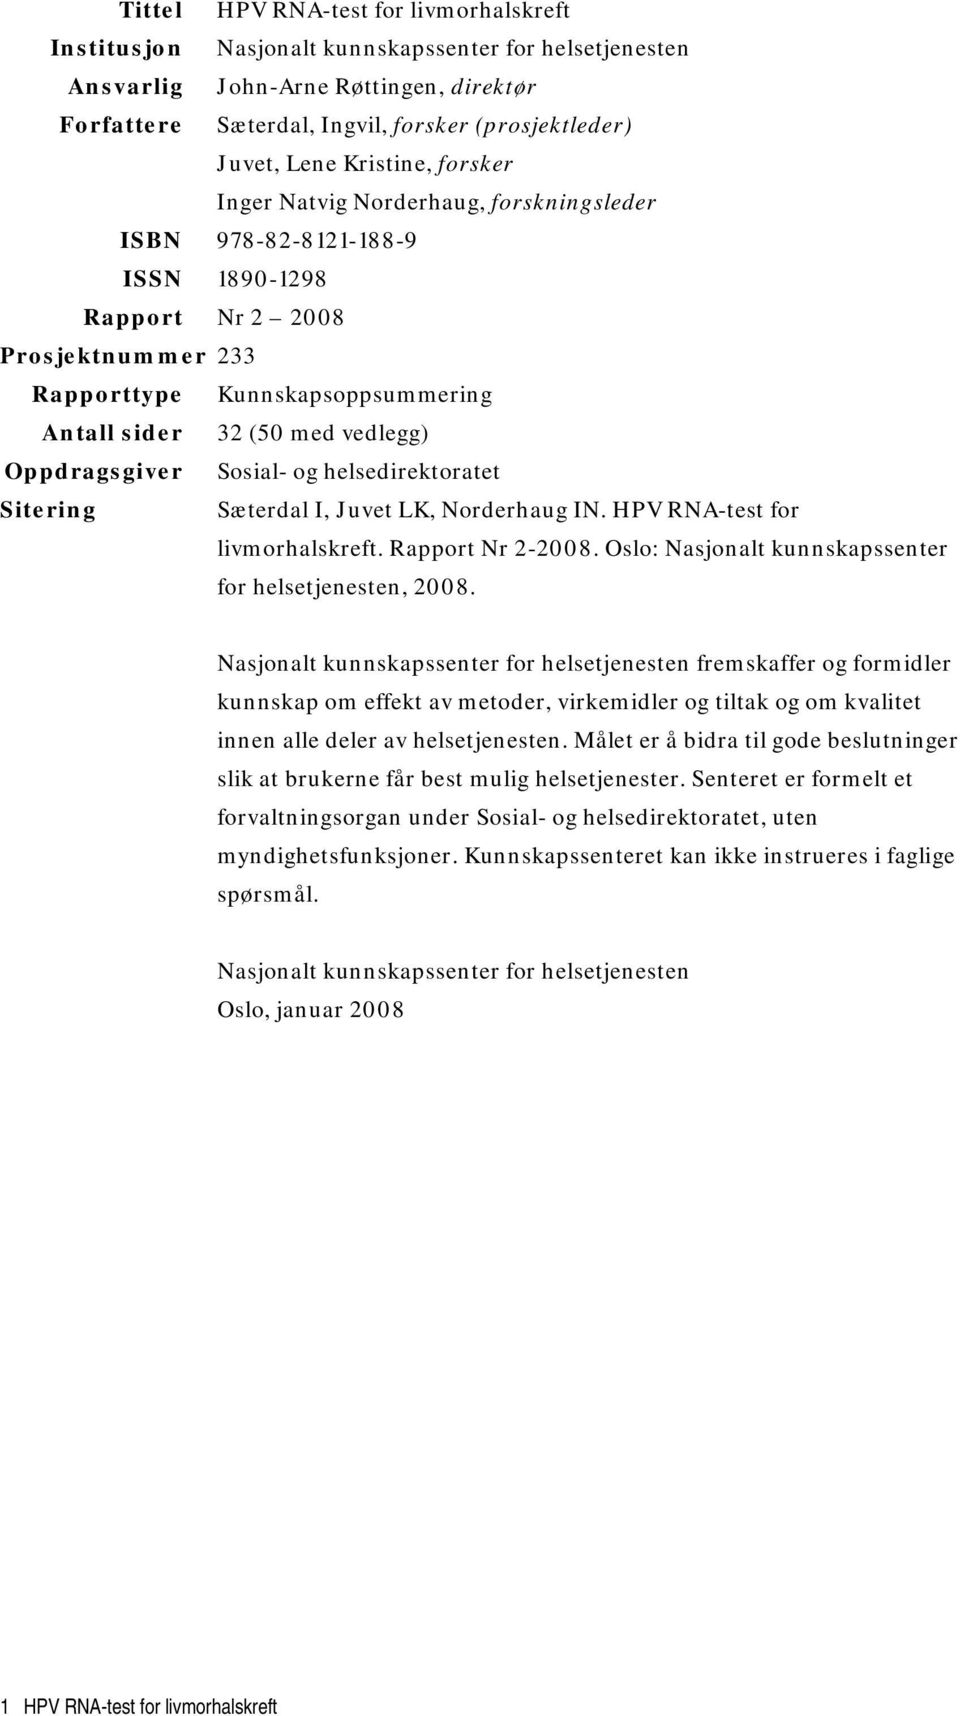 vedlegg) Oppdragsgiver Sosial- og helsedirektoratet Sitering Sæterdal I, Juvet LK, Norderhaug IN. HPV RNA-test for livmorhalskreft. Rapport Nr 2-2008.